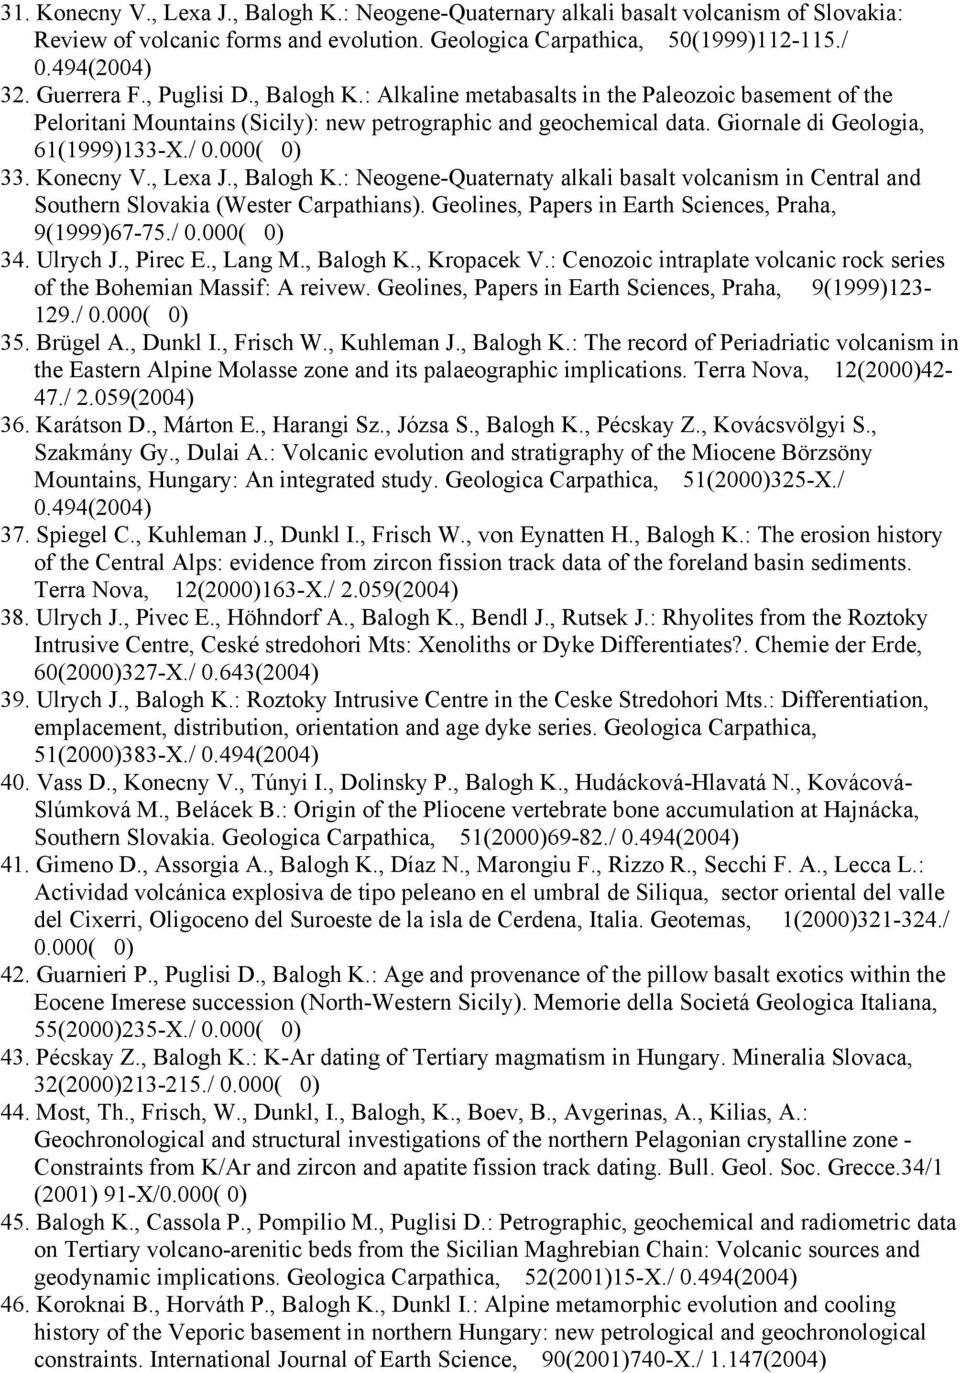 Konecny V., Lexa J., Balogh K.: Neogene-Quaternaty alkali basalt volcanism in Central and Southern Slovakia (Wester Carpathians). Geolines, Papers in Earth Sciences, Praha, 9(1999)67-75./ 0.